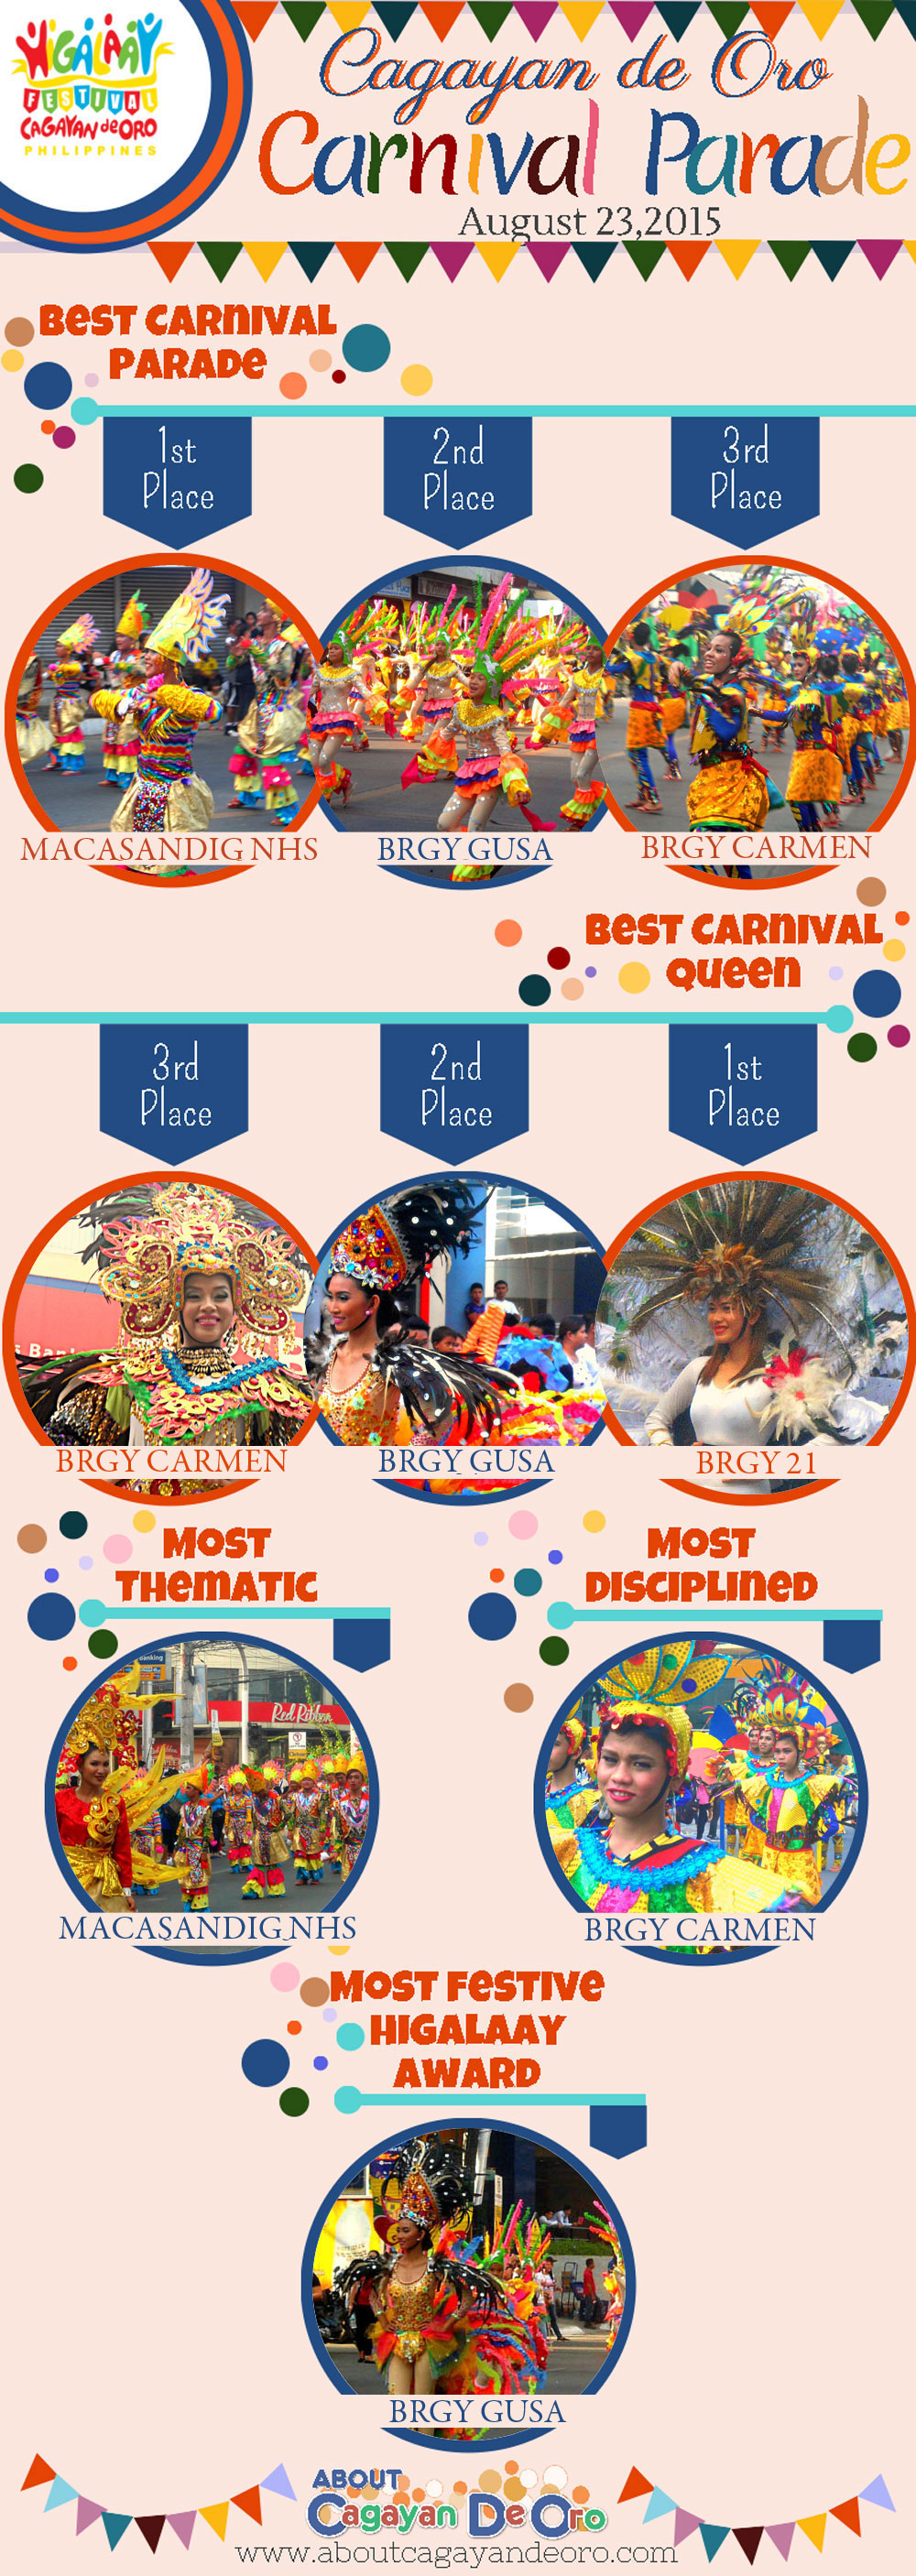 Cagayan de Oro Carnival Parade 2015 List of Winners